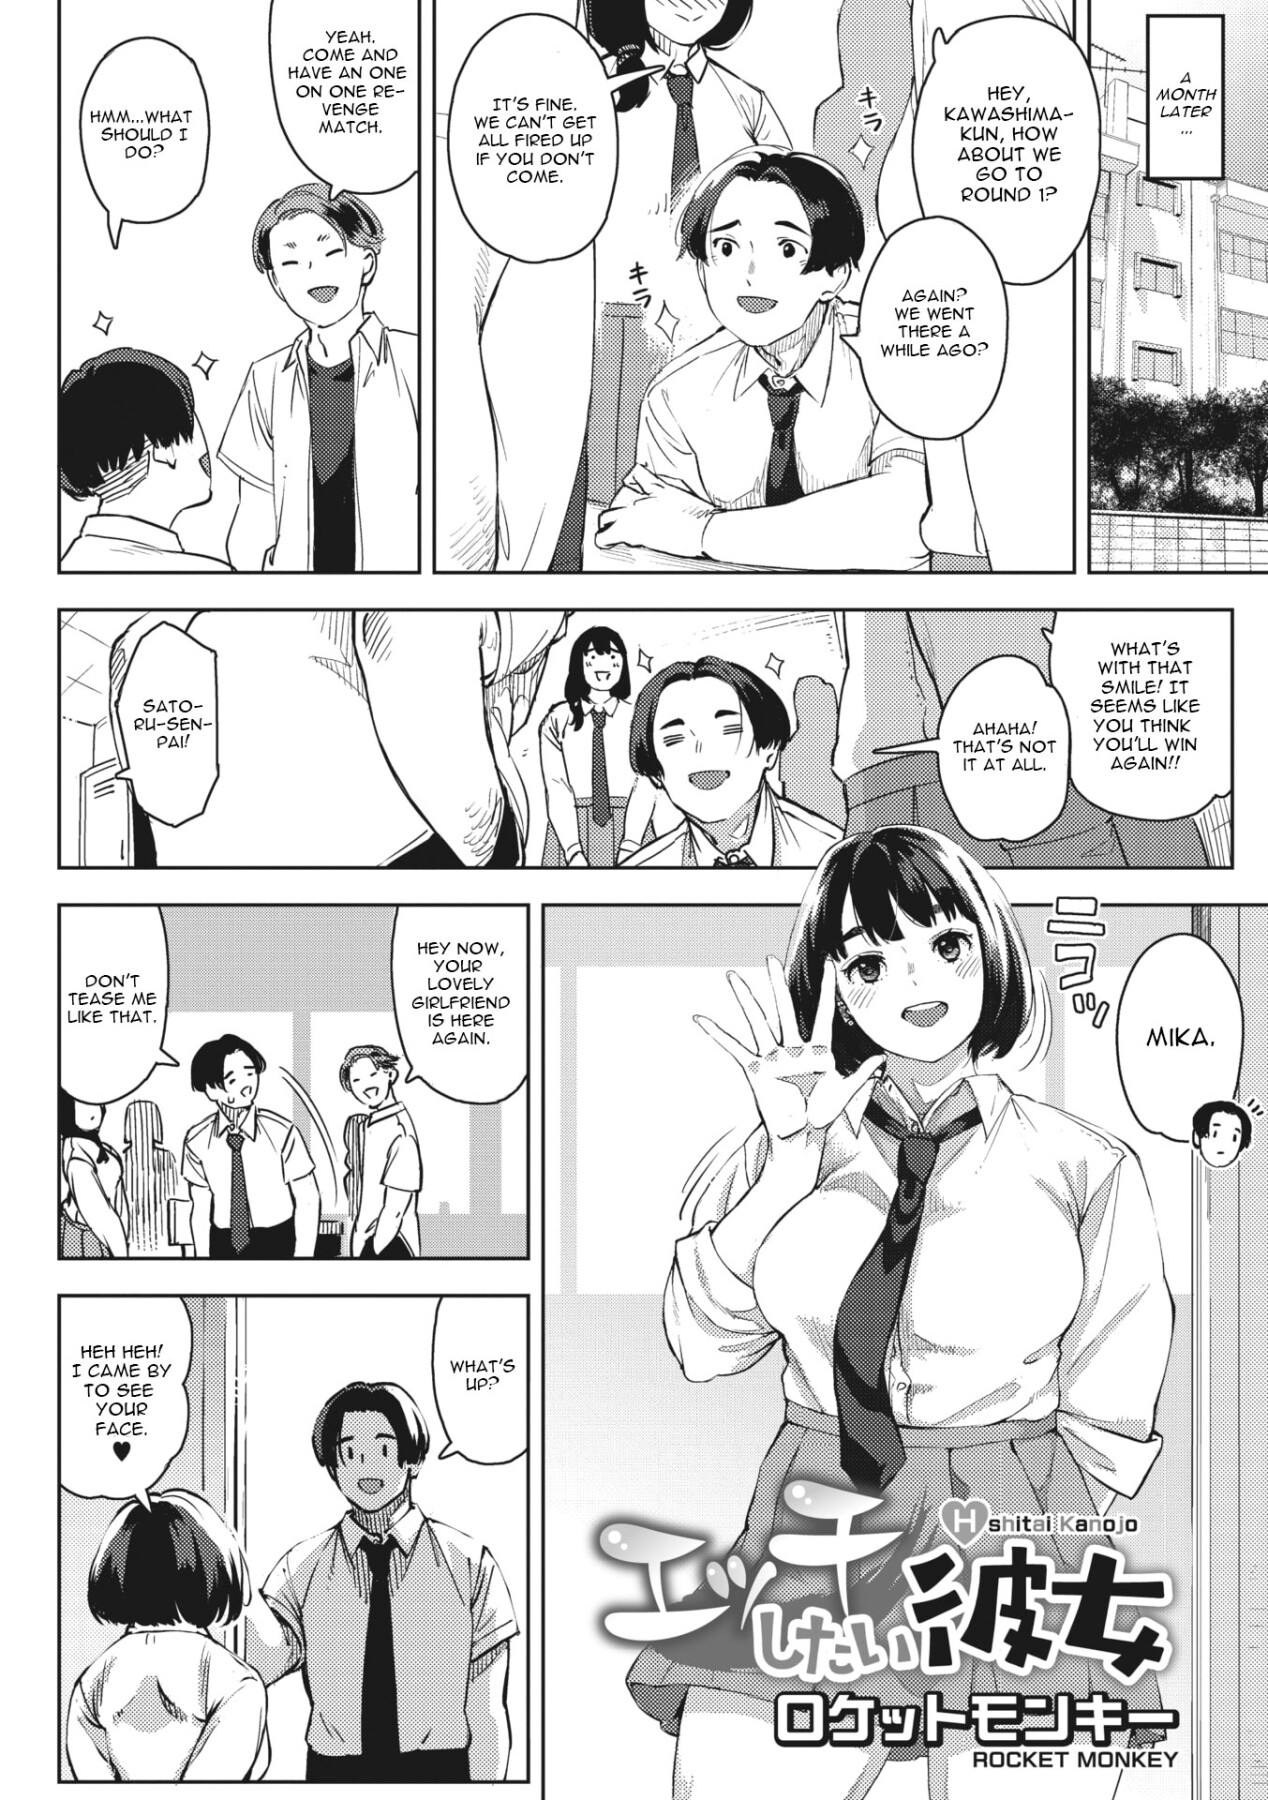 Hentai Manga Comic-My girlfriend who wants to have sex-Read-2